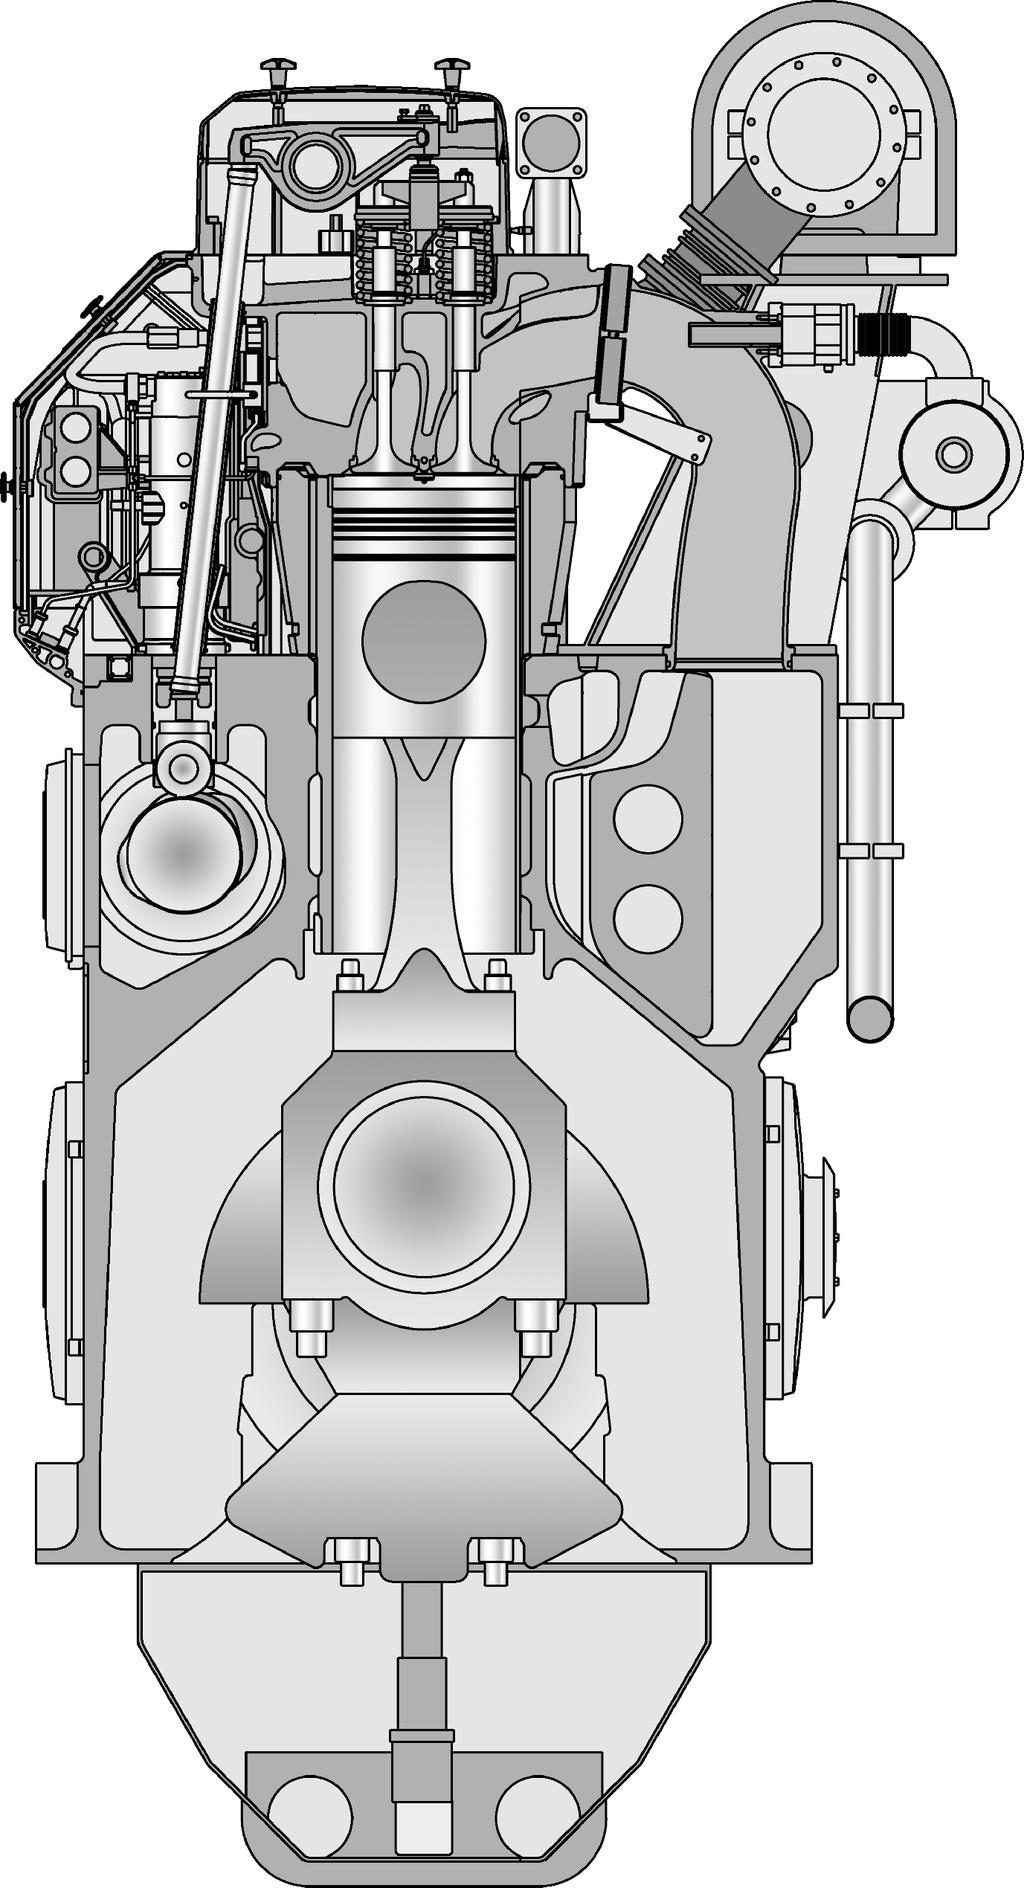 Wärtsilä 50DF Product Guide 4. Description of the Engine 4.